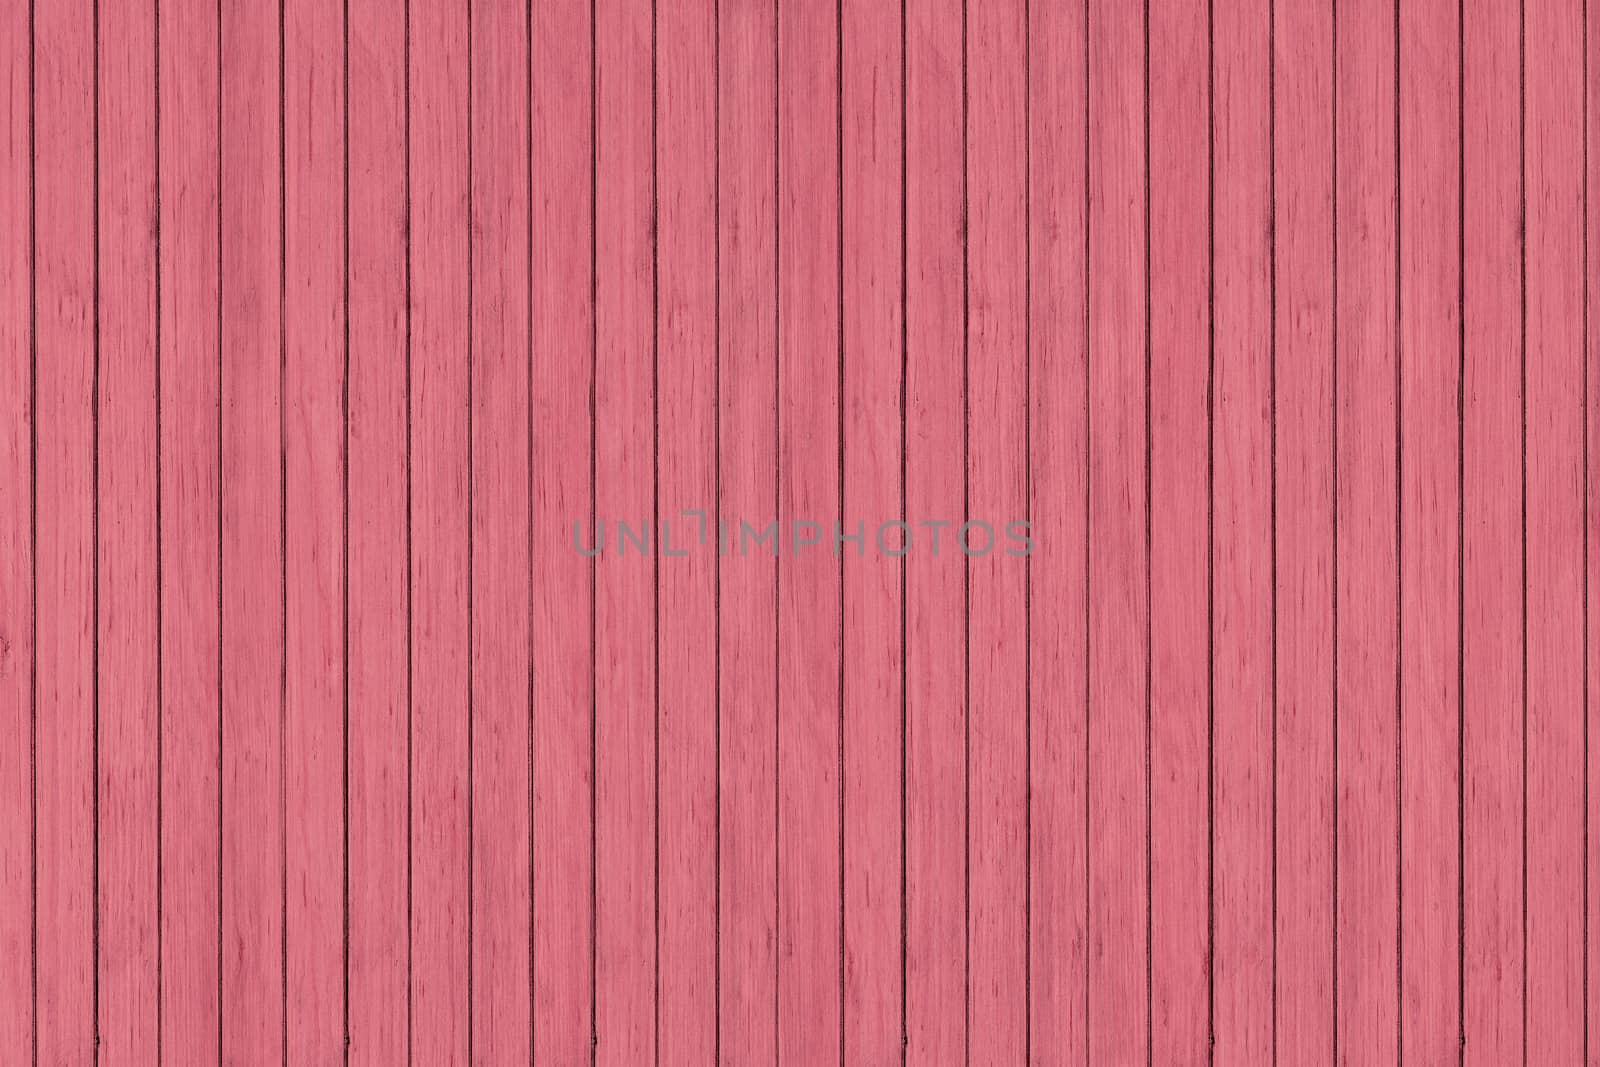 pink grunge wood pattern texture background, wooden planks